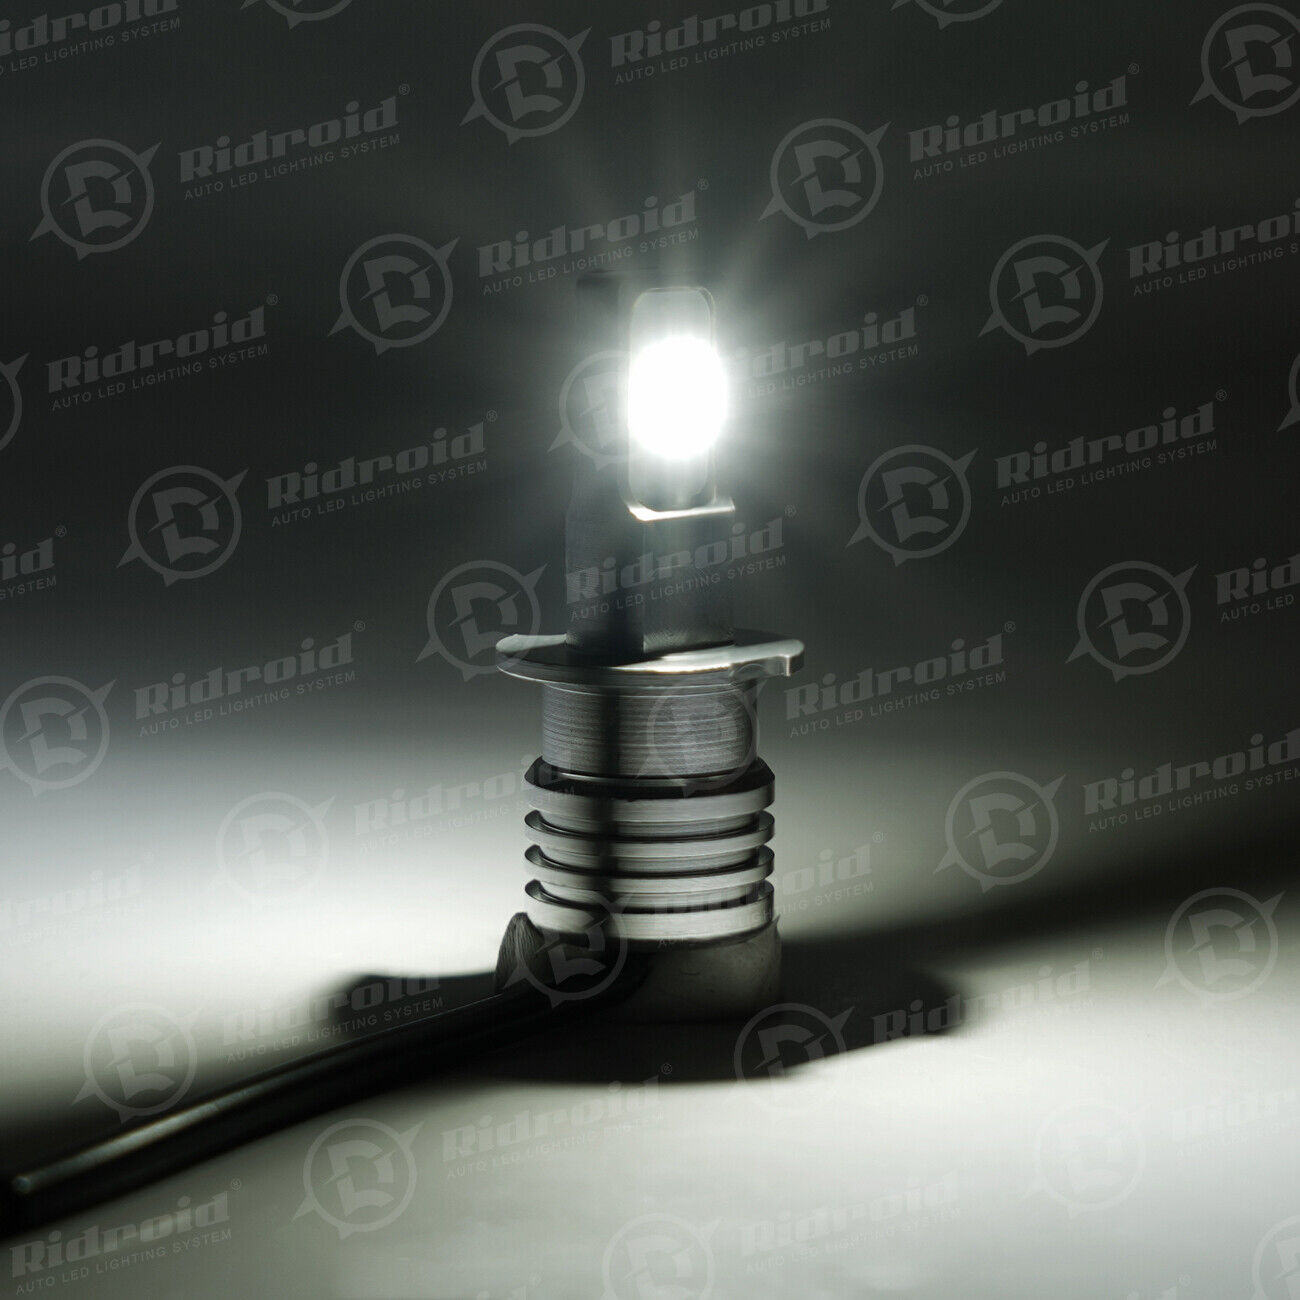 2pcs H3 LED Headlight 100W 10000LM FOG Light Bulbs 6000K White Driving DRL Lamp Ridroid rdddwd0h3 - фотография #11